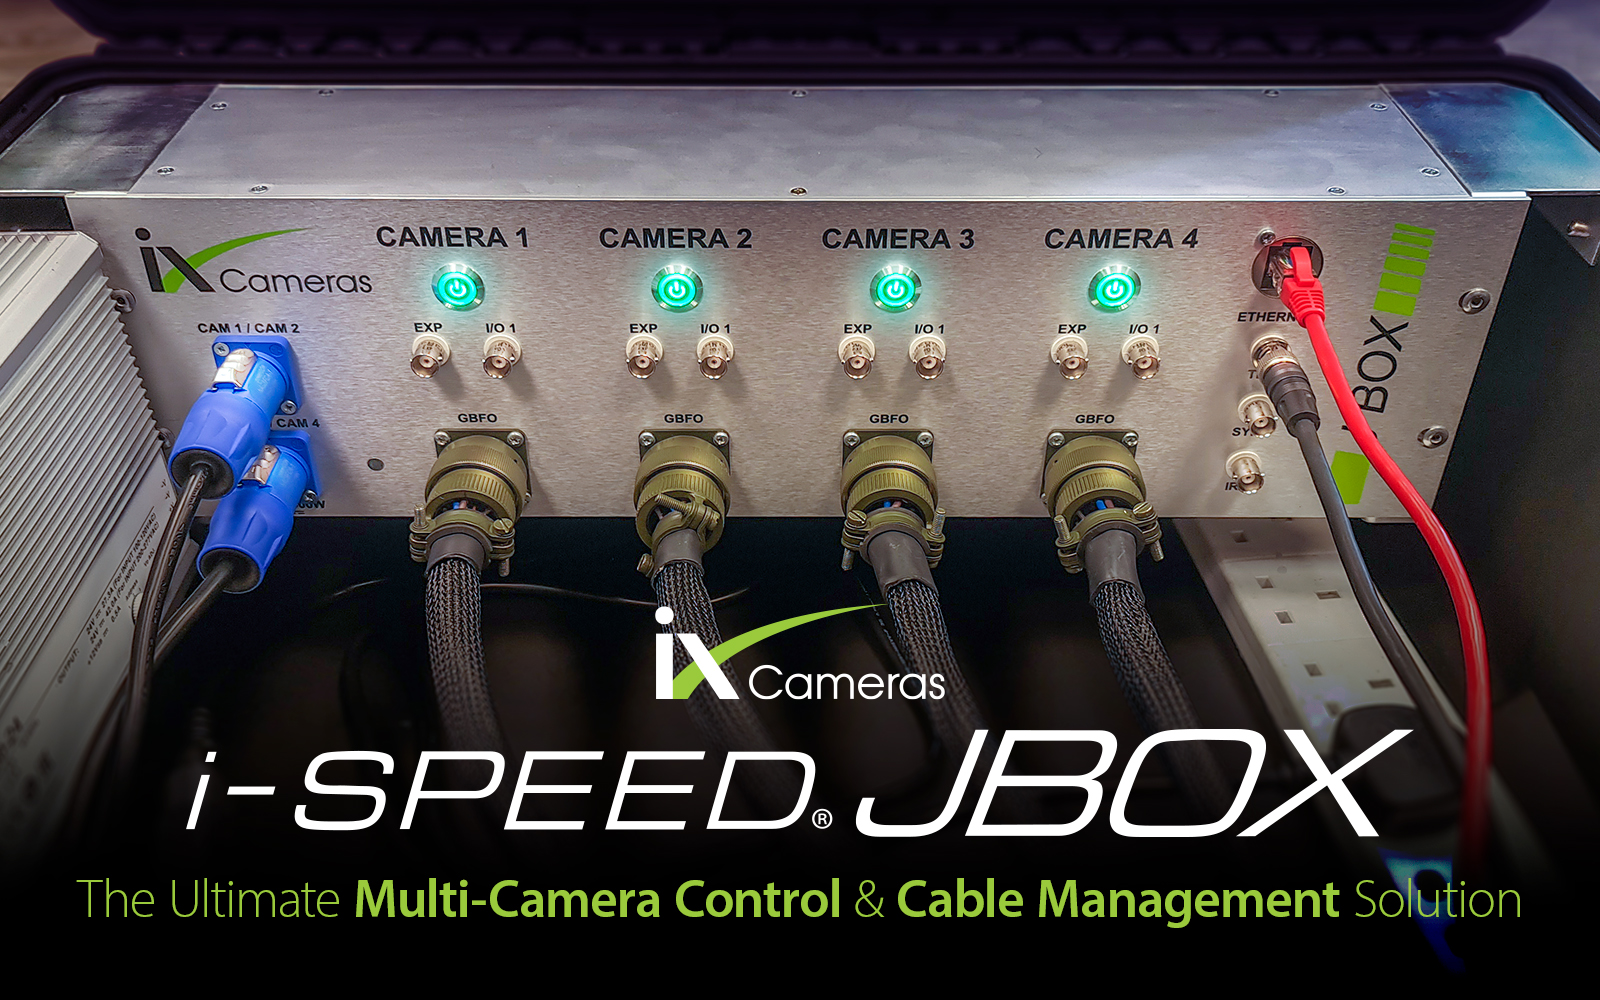 iX Cameras i-SPEED JBOX feature image.